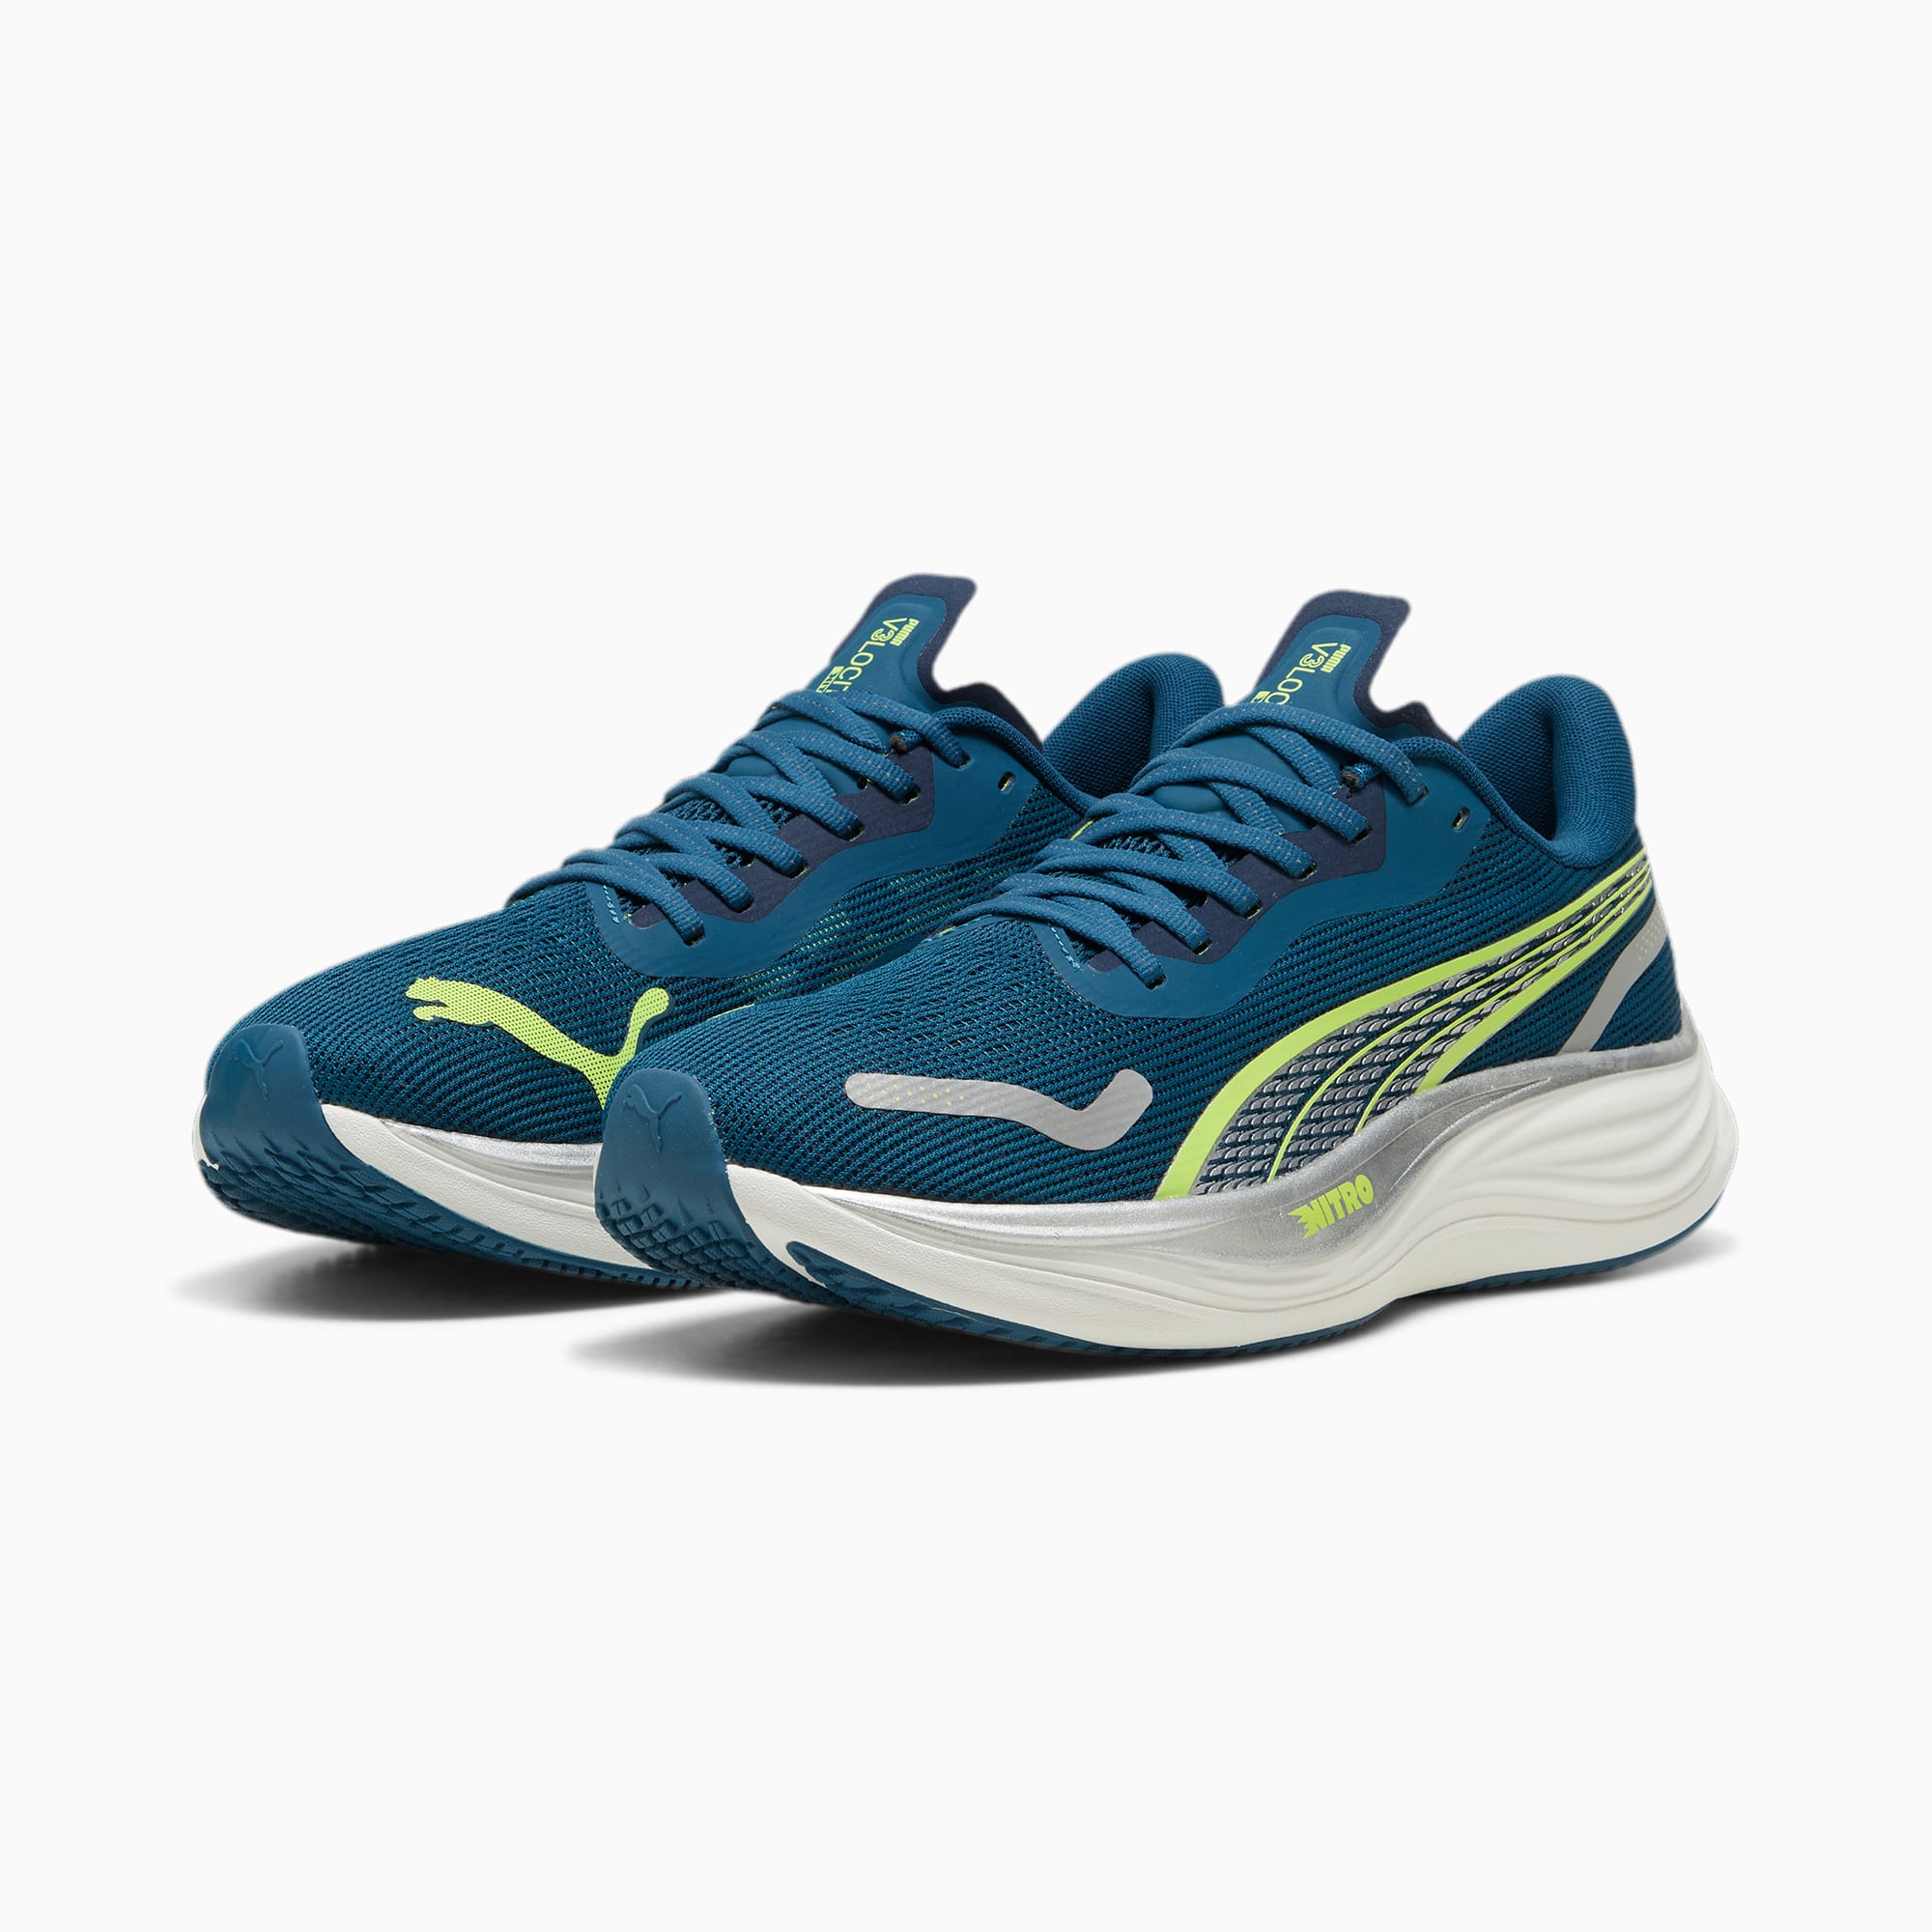 PUMA Chaussures De Running Velocity NITRO™ 3 Pour Homme, Bleu/Vert/Argent